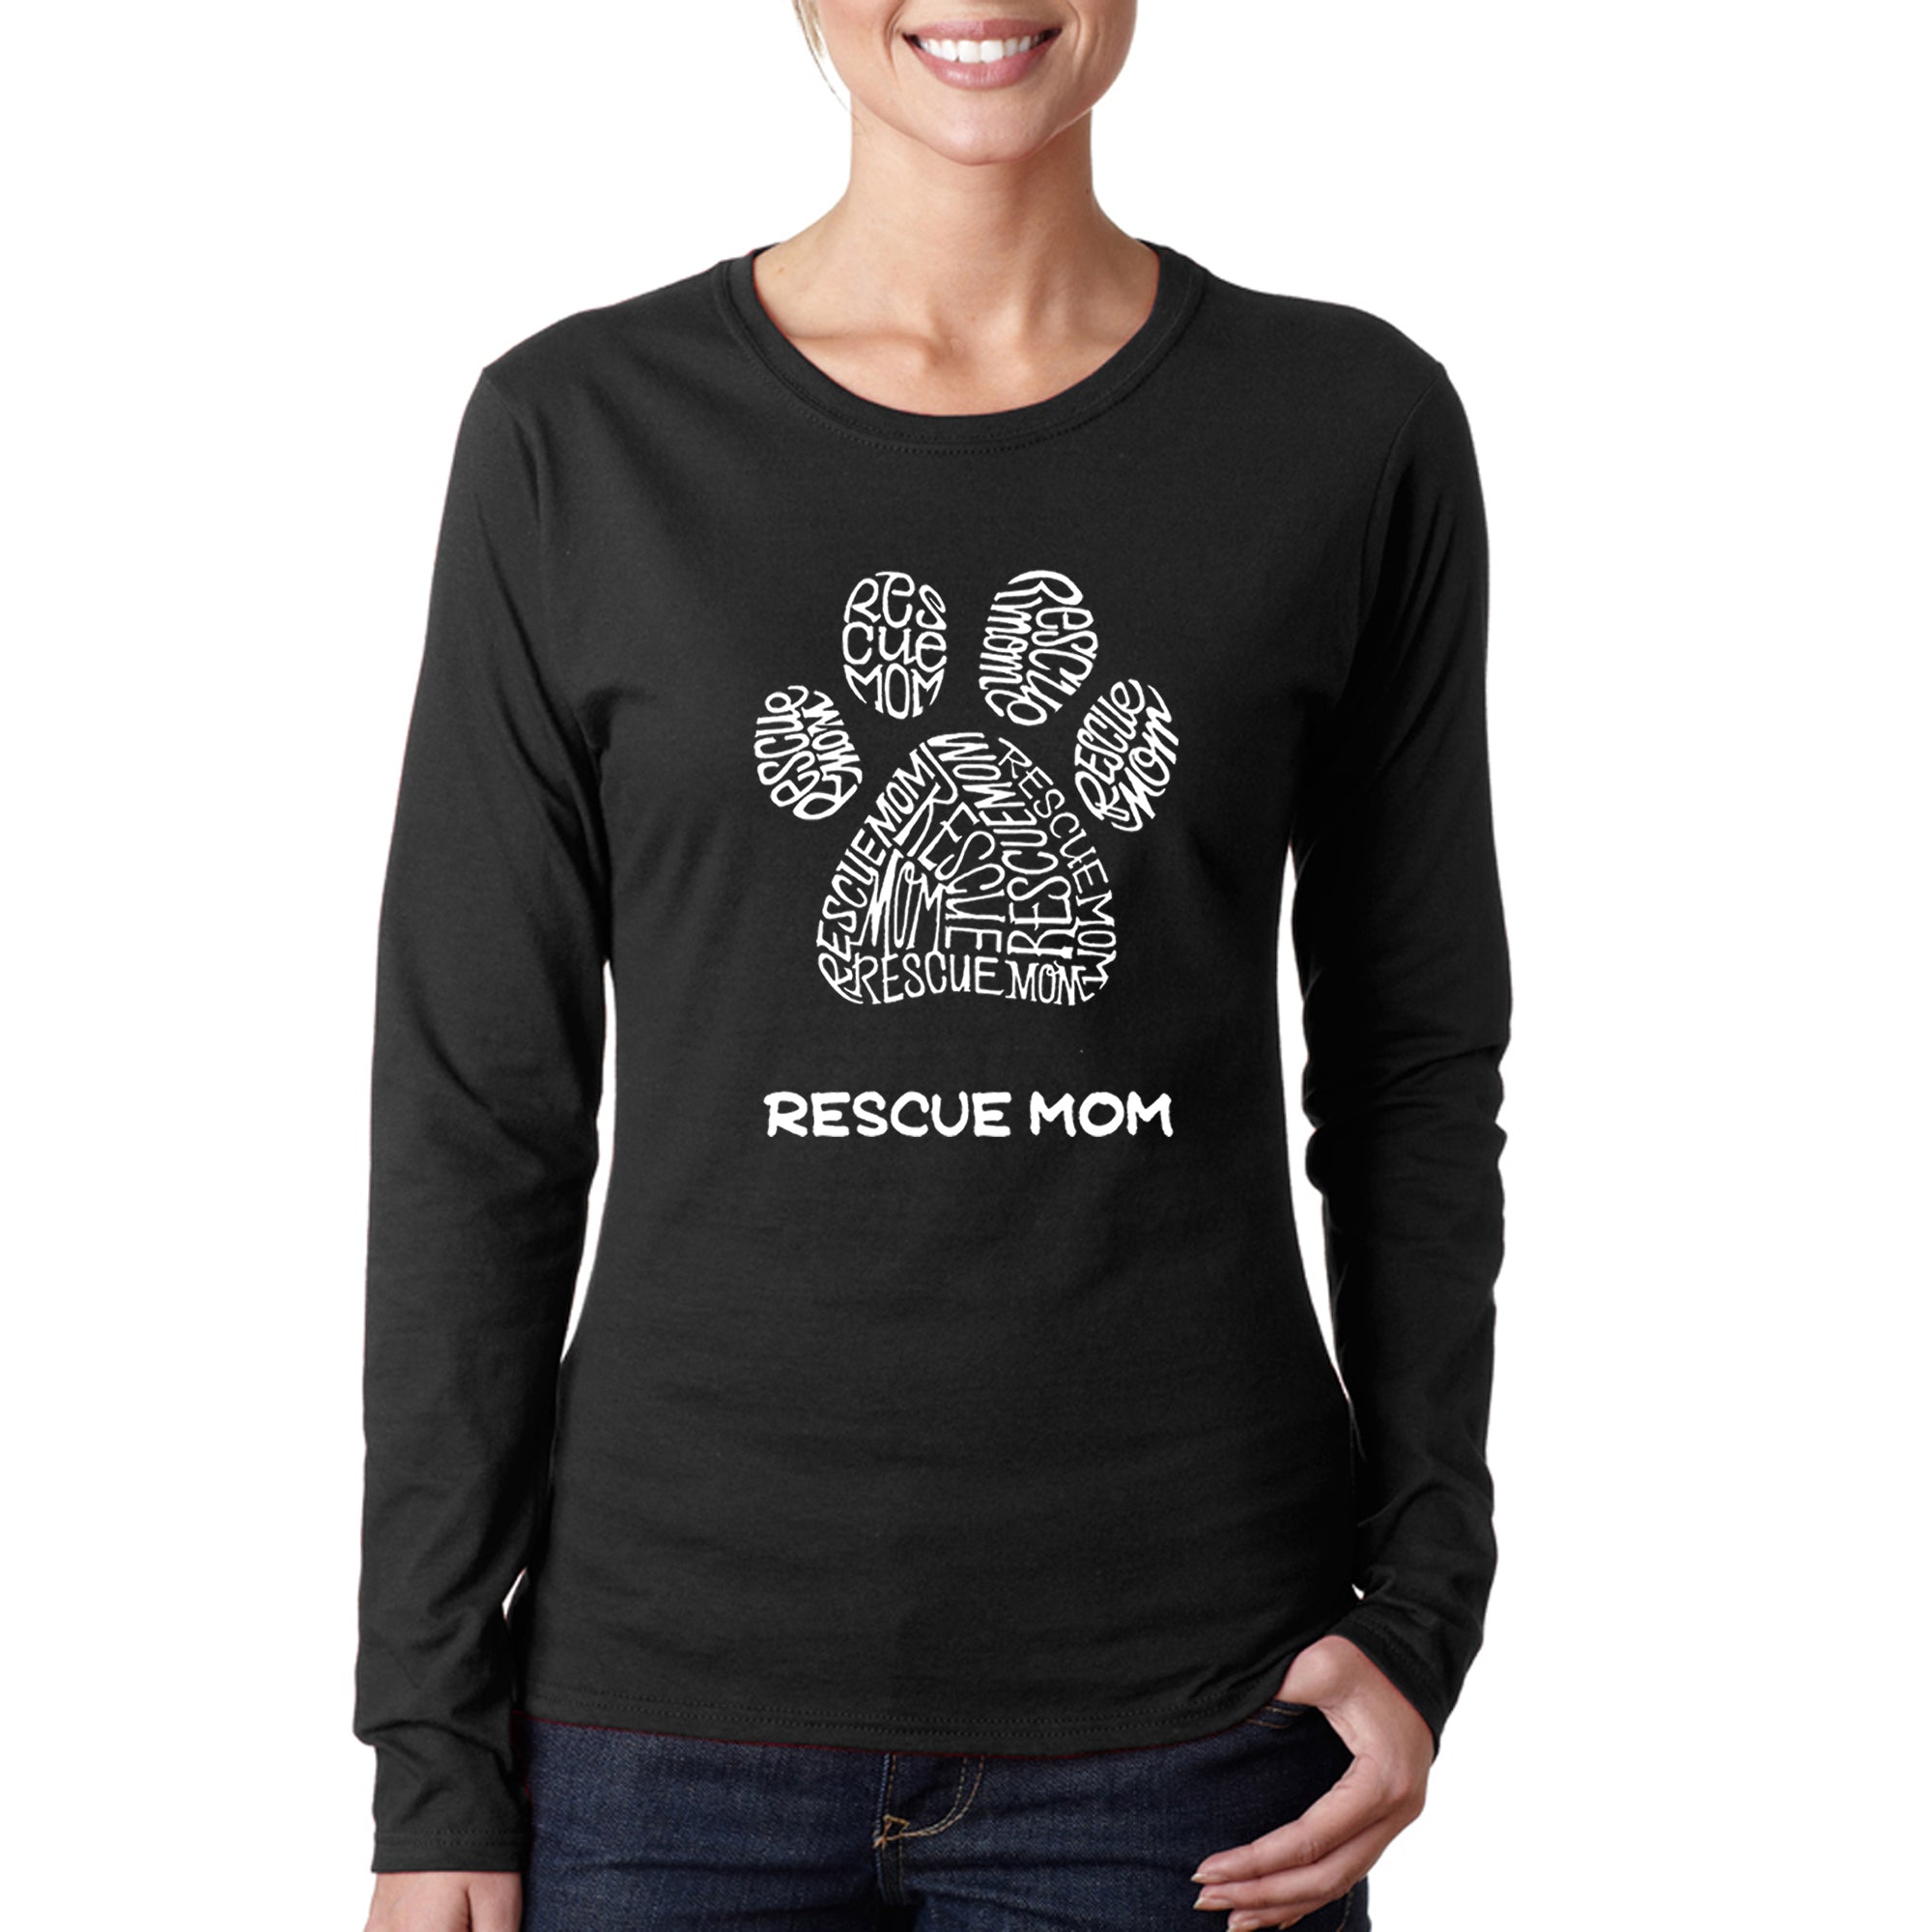 Rescue Mom - Women's Word Art Long Sleeve T-Shirt - Black - XX-Large